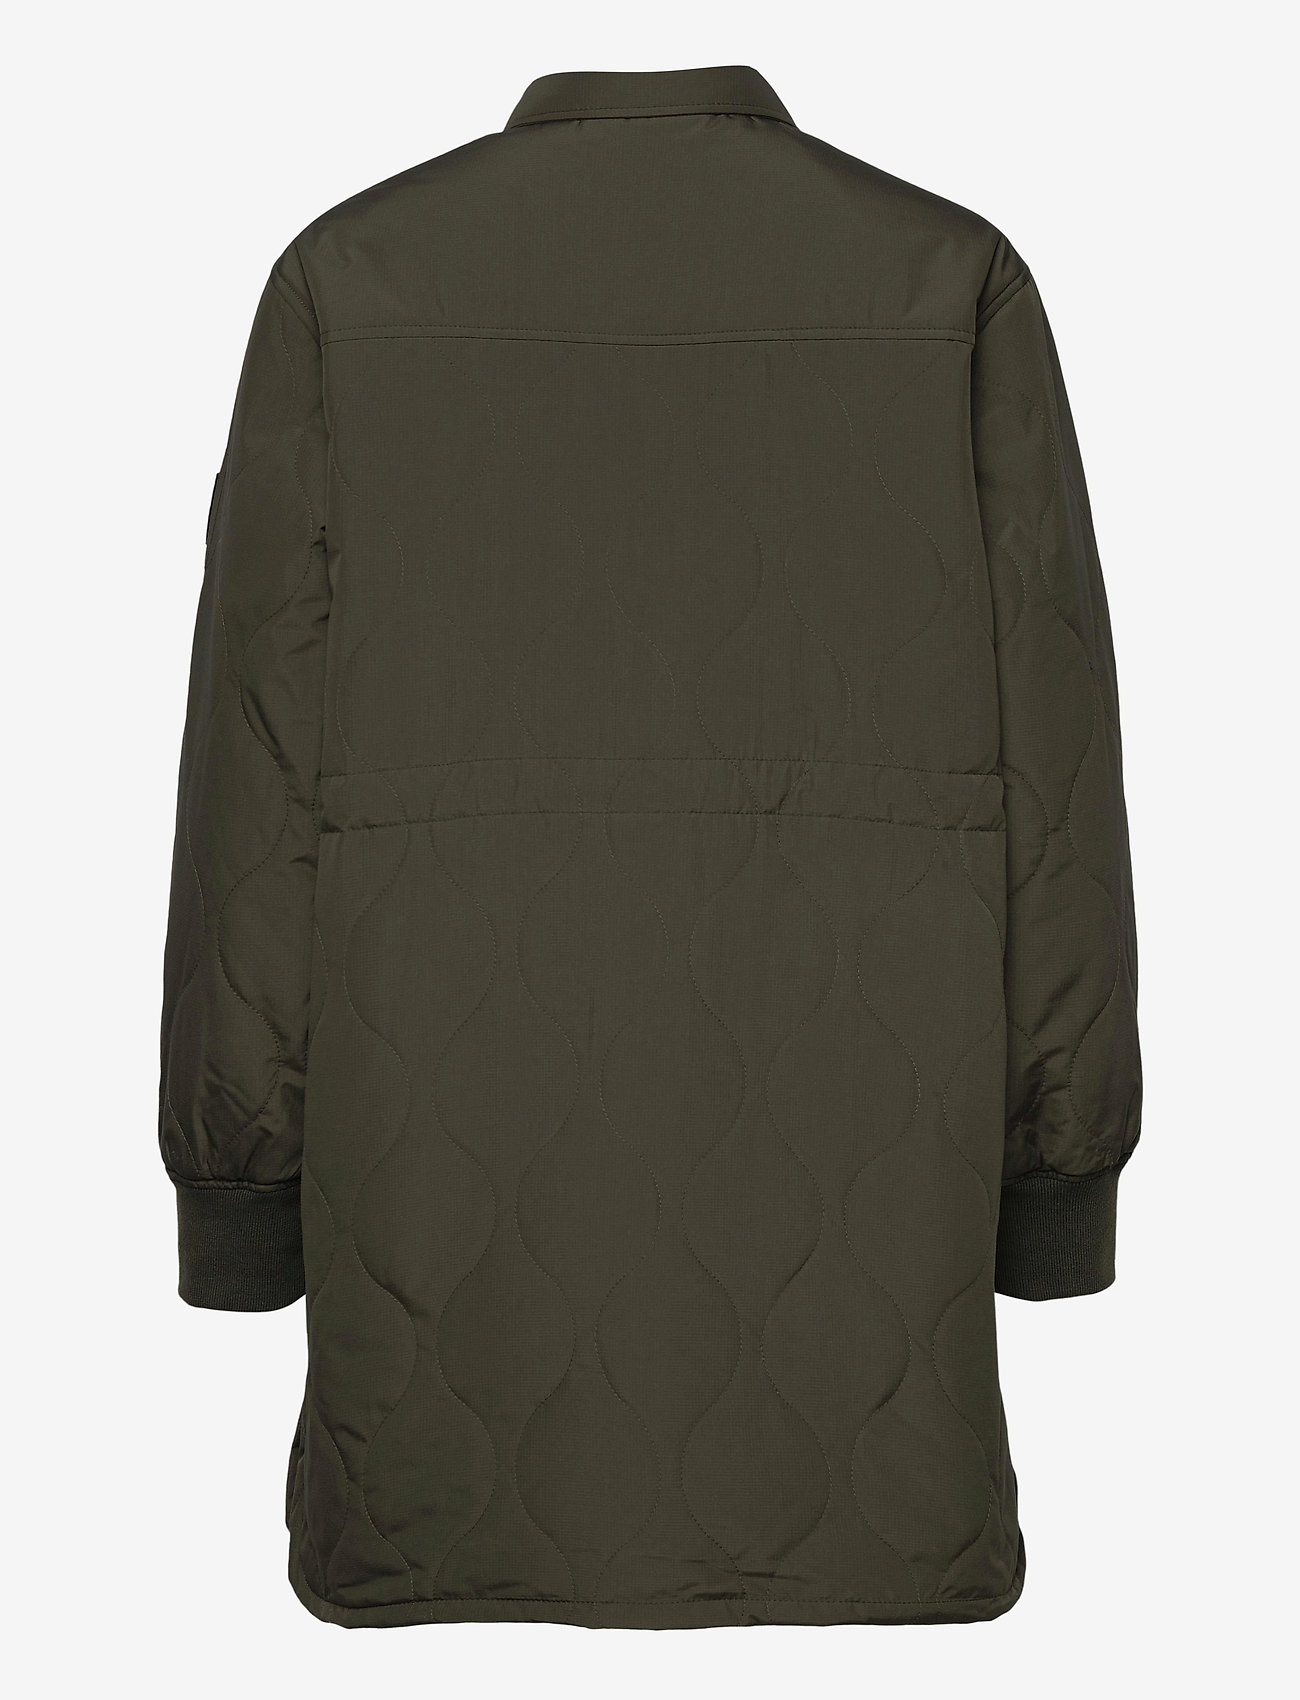 Svea - W. Queens Shirt Jacket - spring jackets - dark army - 1